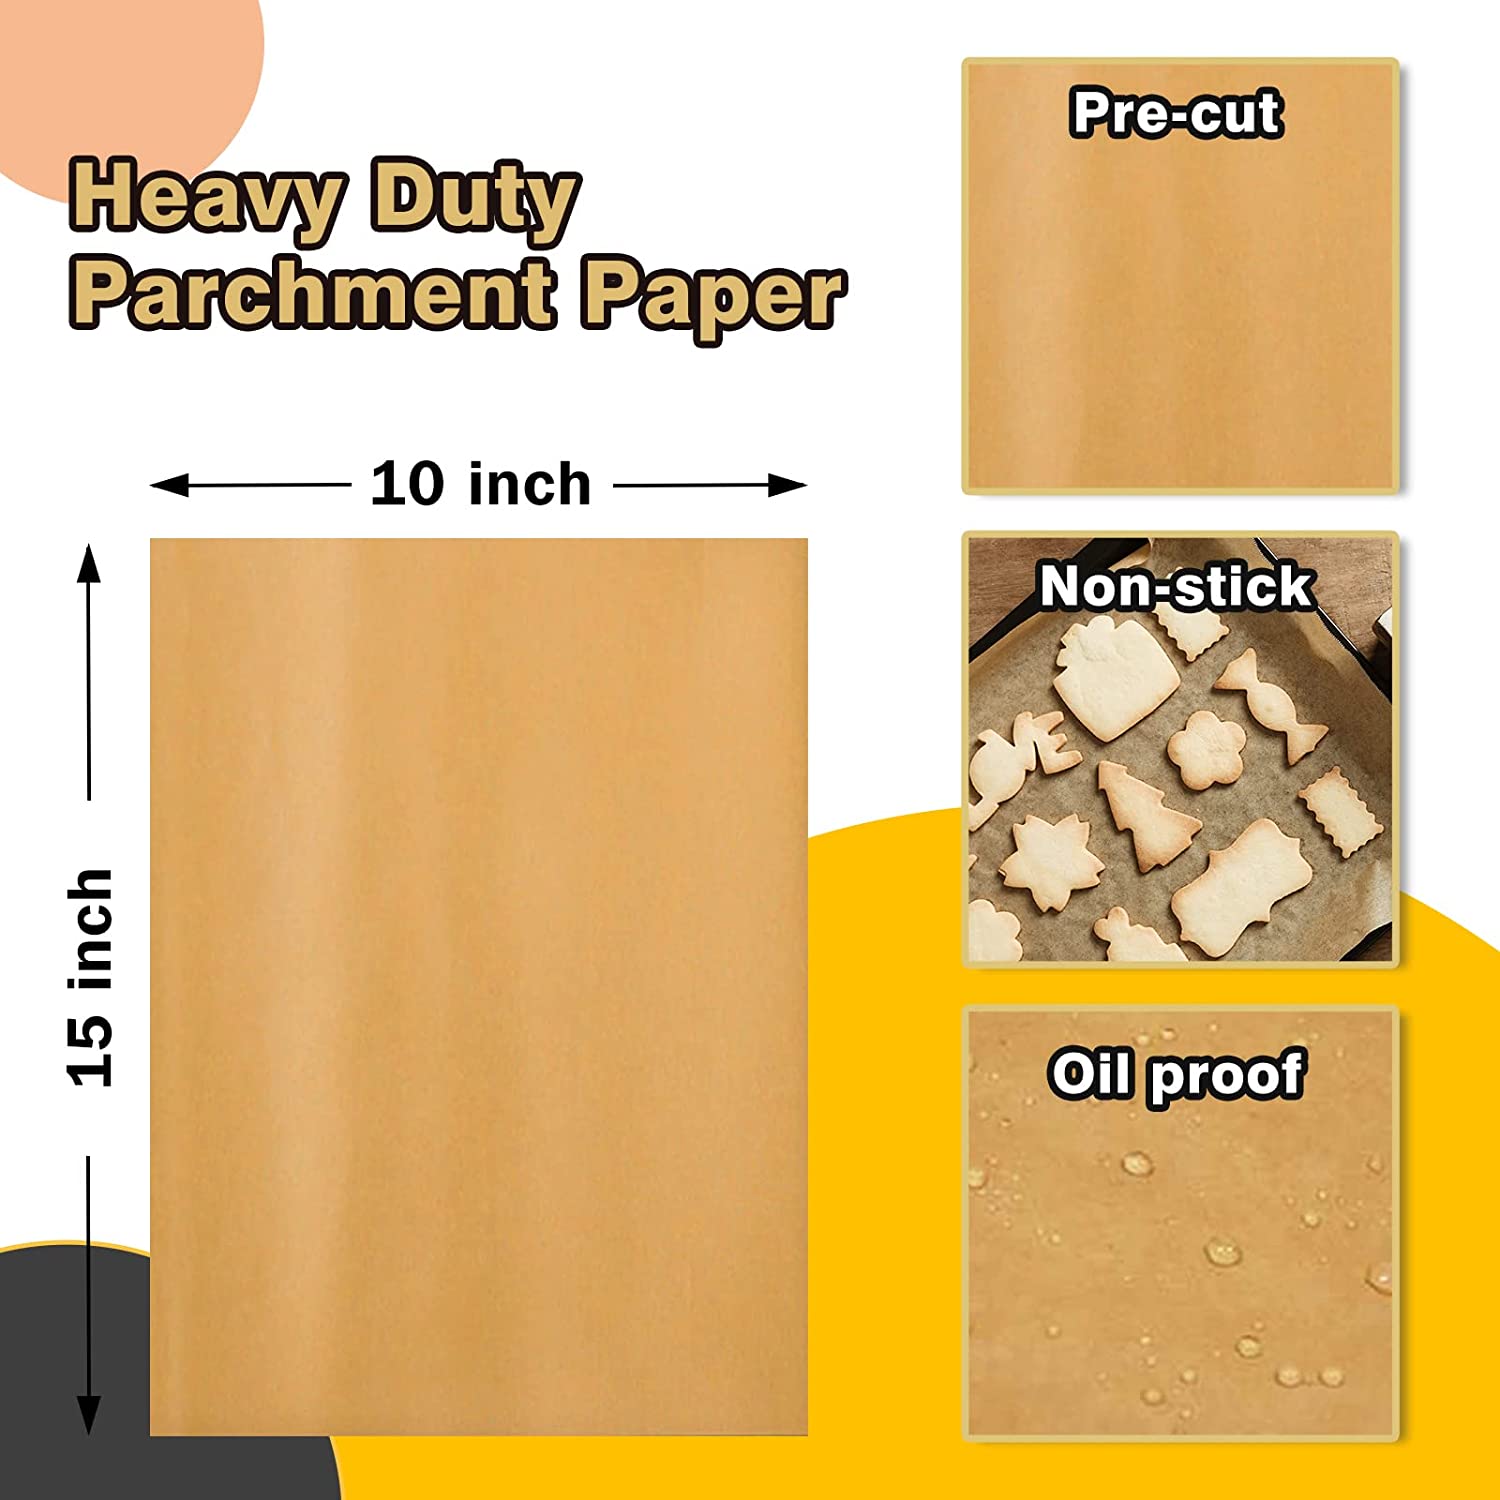 Katbite 15in x 242ft, 300 Sq.Ft Unbleached Parchment Paper Roll